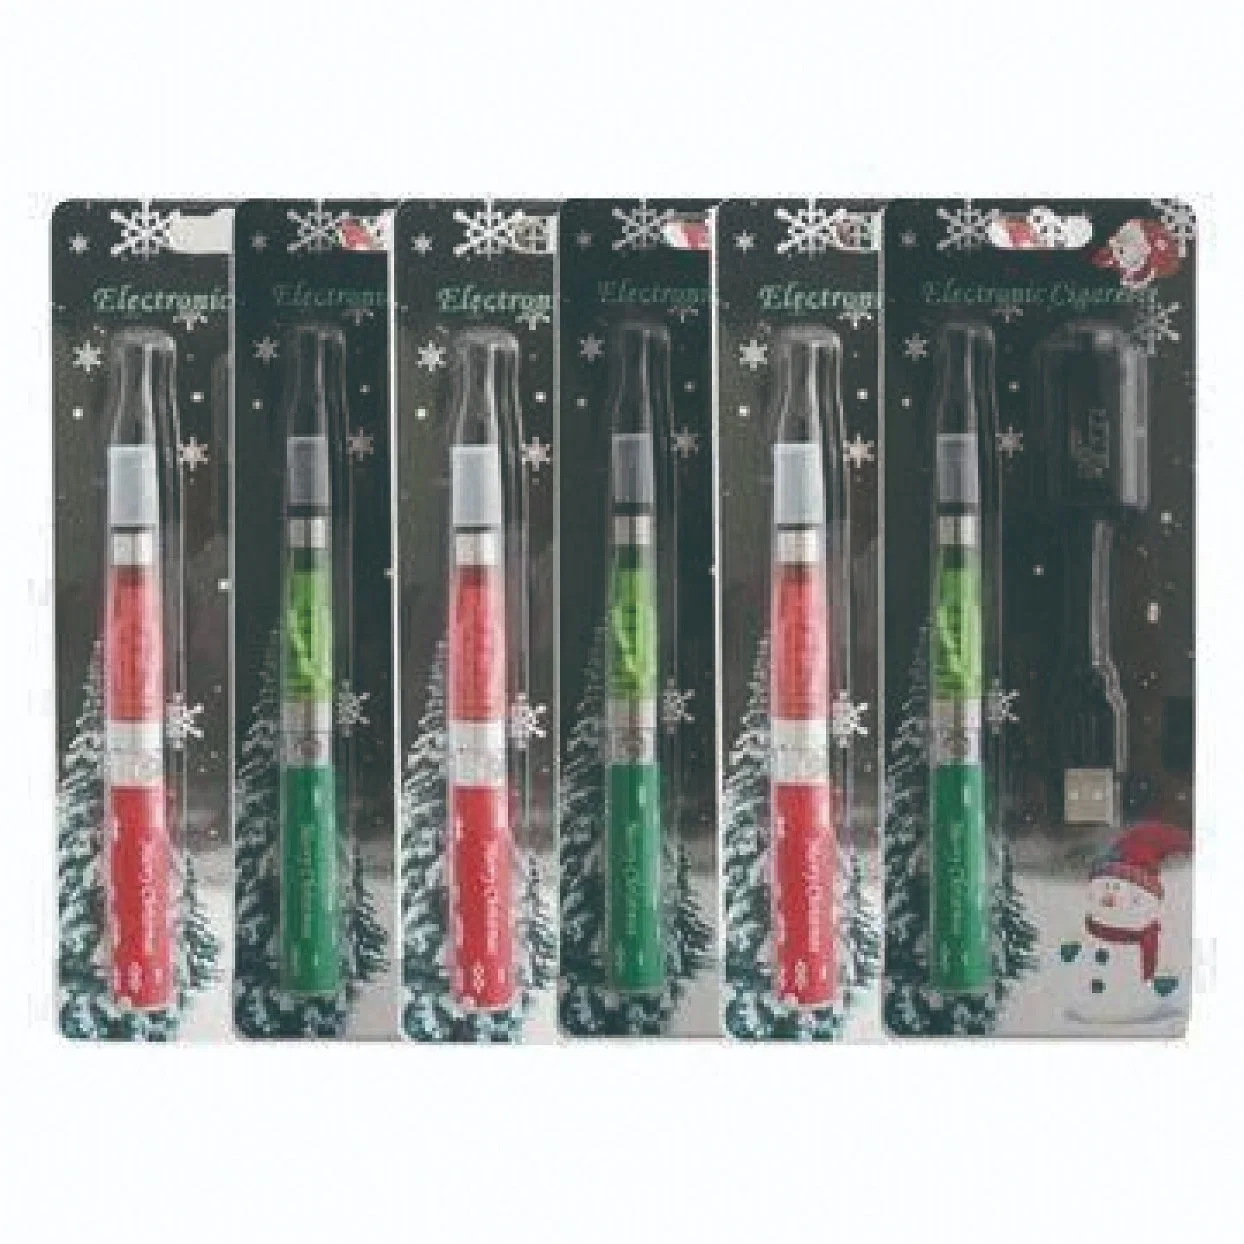 New Products 2014 E-Cigarette Color, Vaporizers Wholesale CE4 EGO Starter Kits